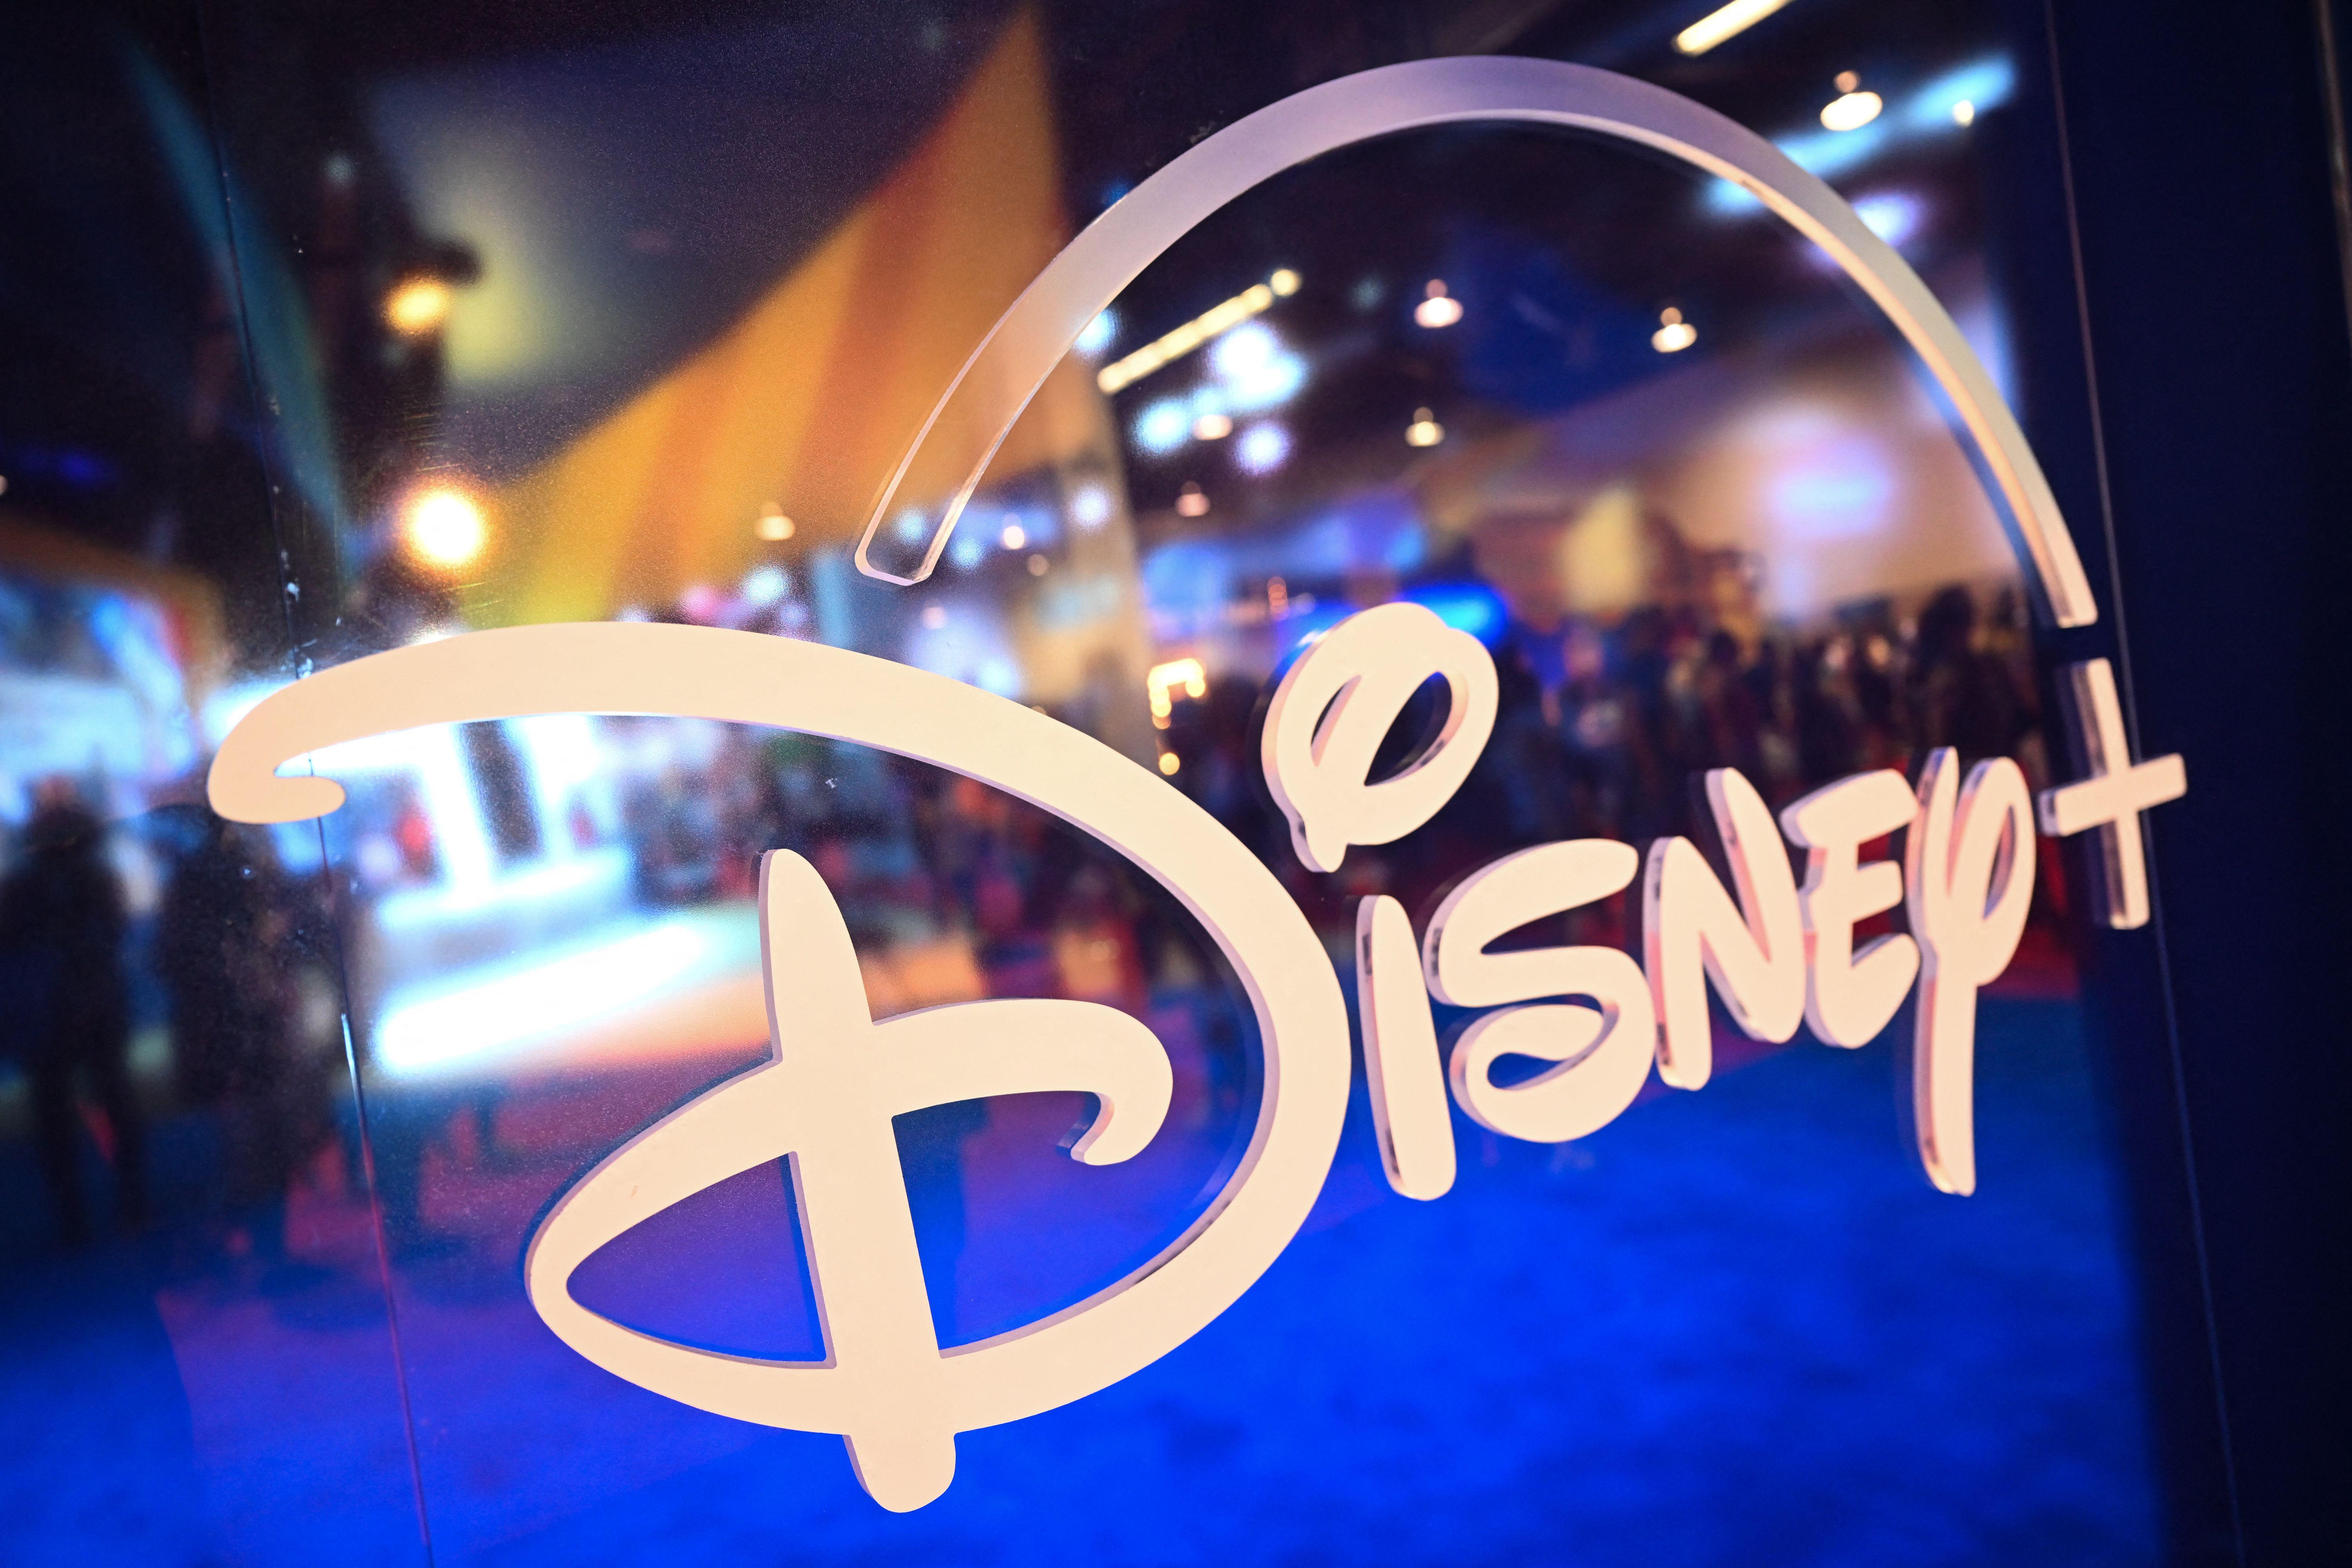 The Disney logo on a glass door.